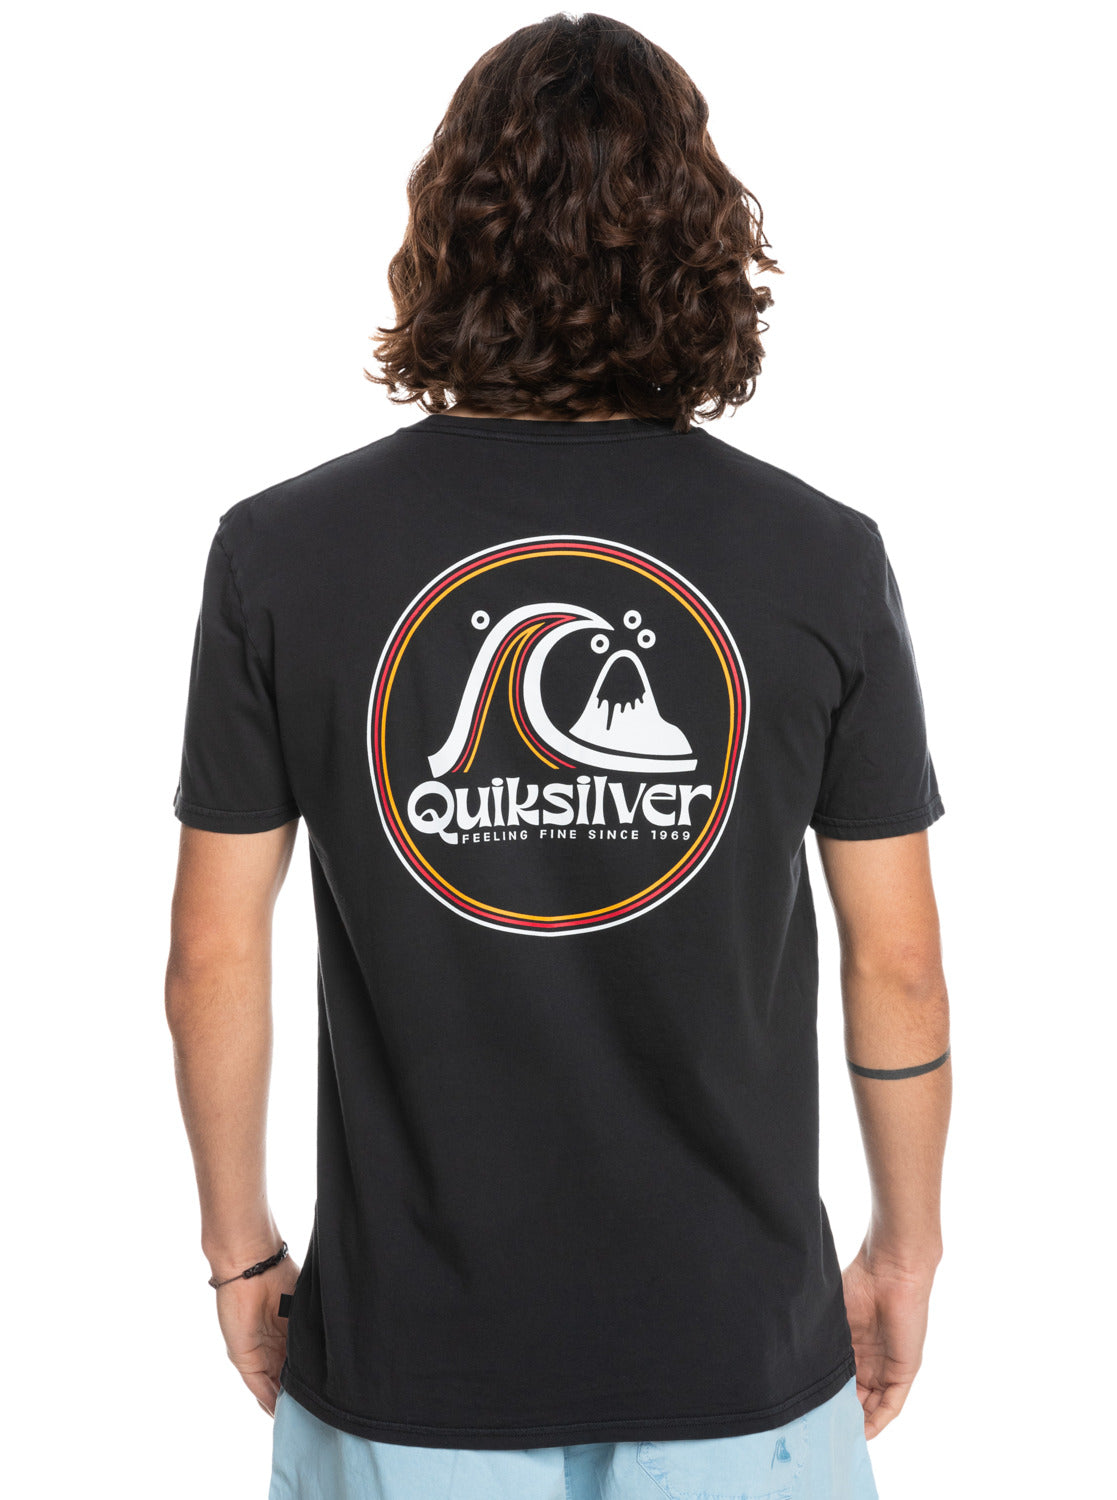 Rolling Circle T-Shirt